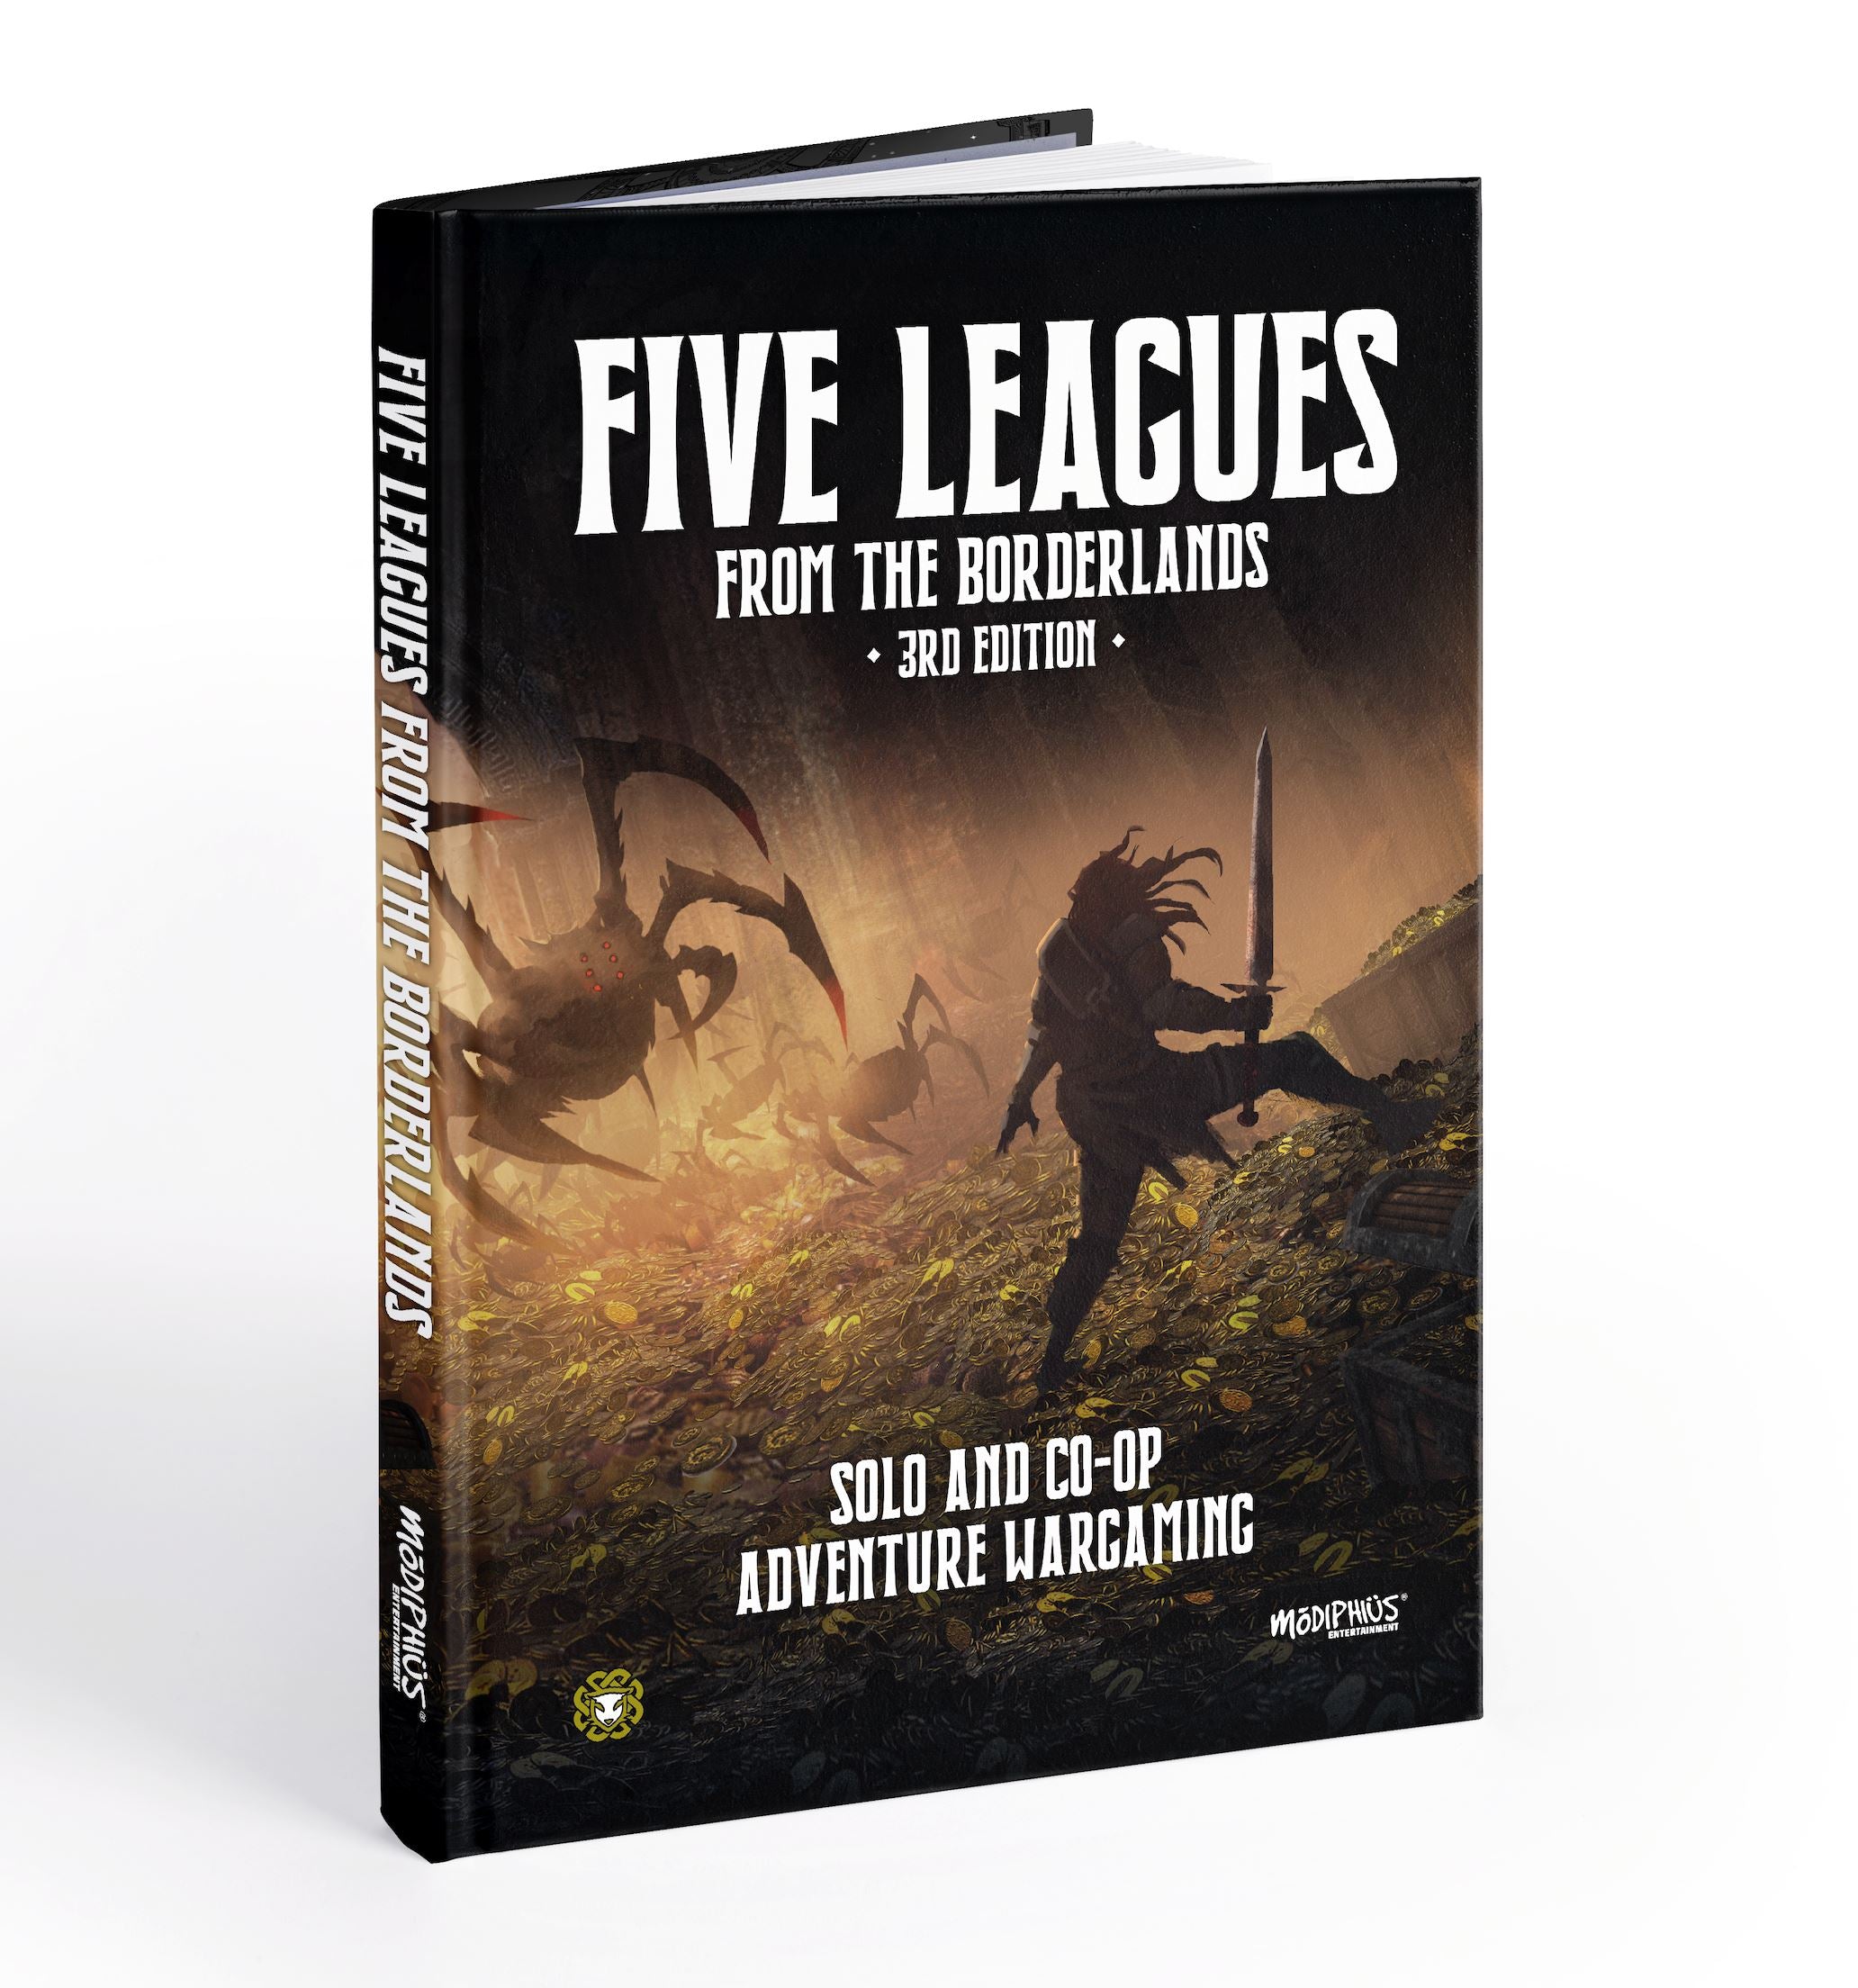 Five Leagues from the Borderlands Five Leagues from the Borderlands Modiphius Entertainment 